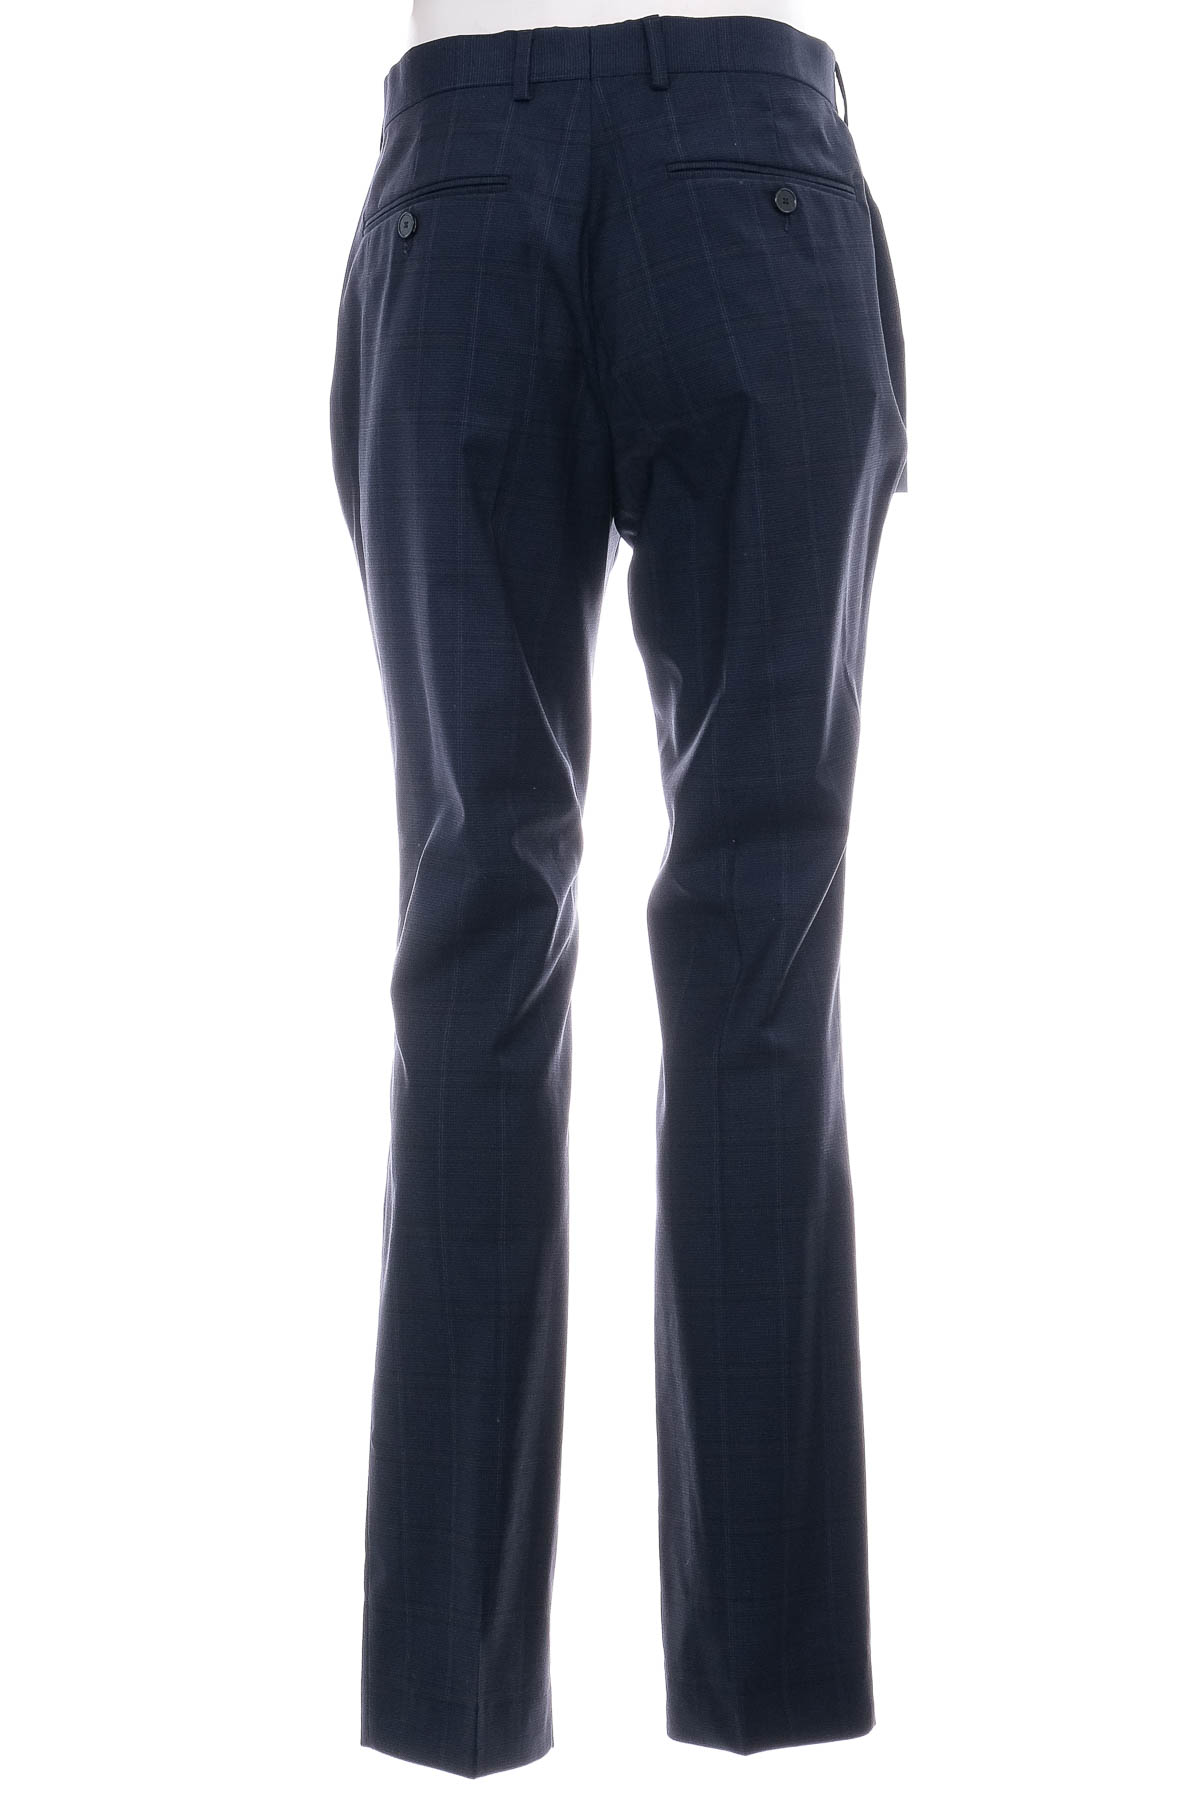 Men's trousers - TOM TAILOR - 1